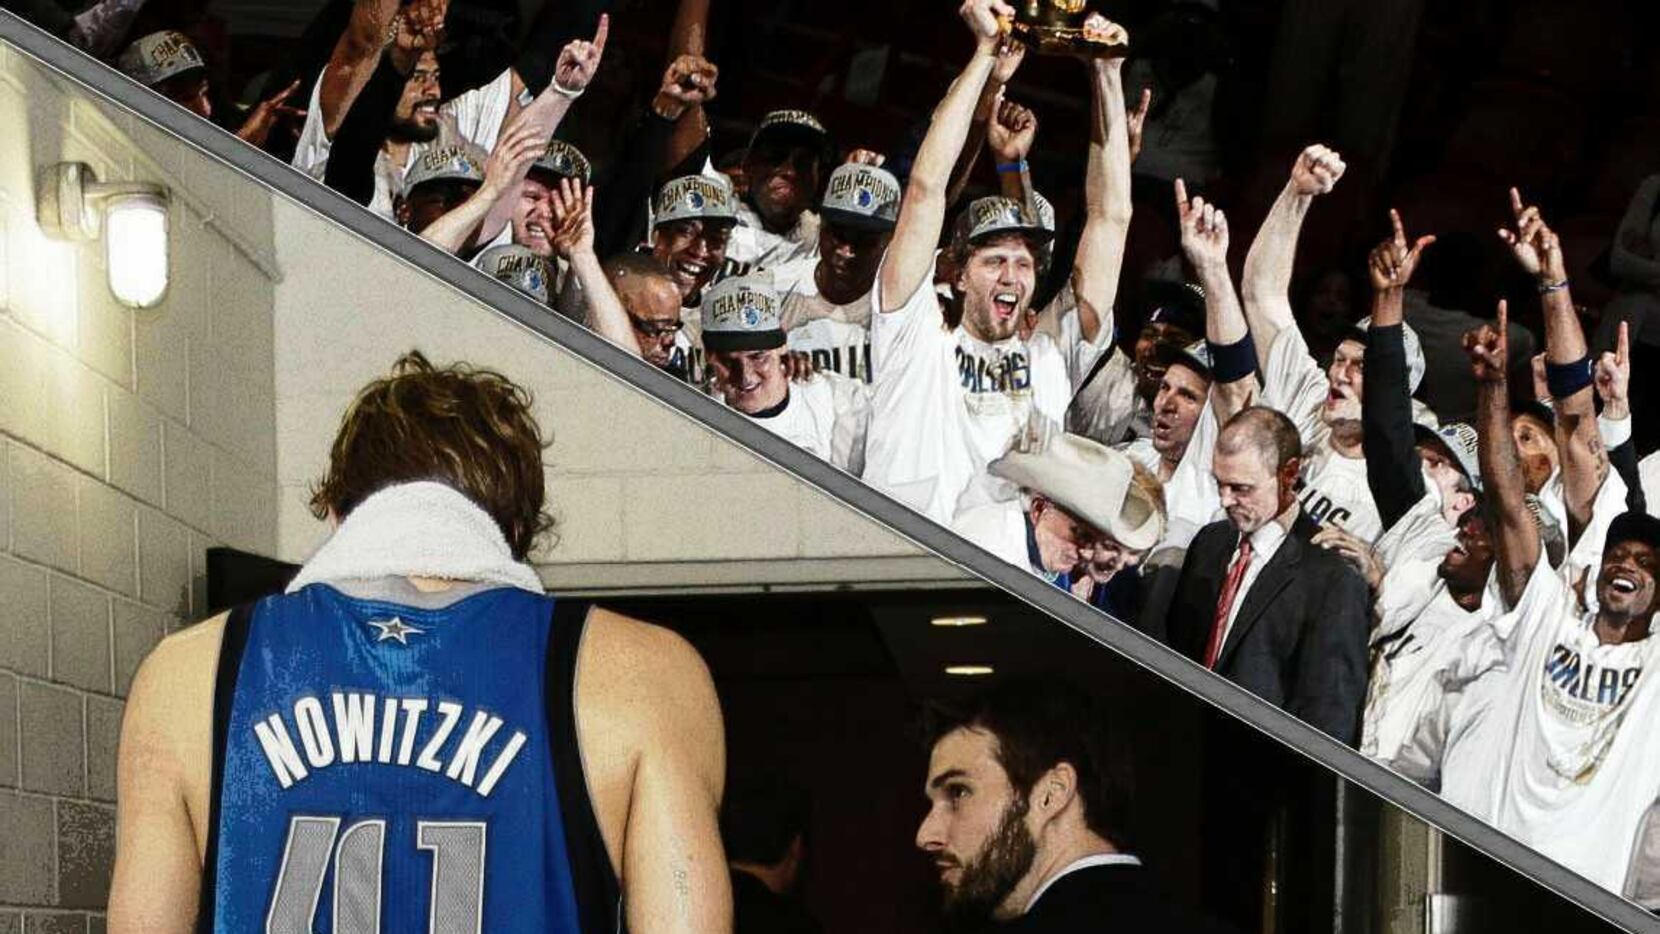 2011 NBA Authentic Dirk Nowitzki jersey, championship season, size M  Authentic 